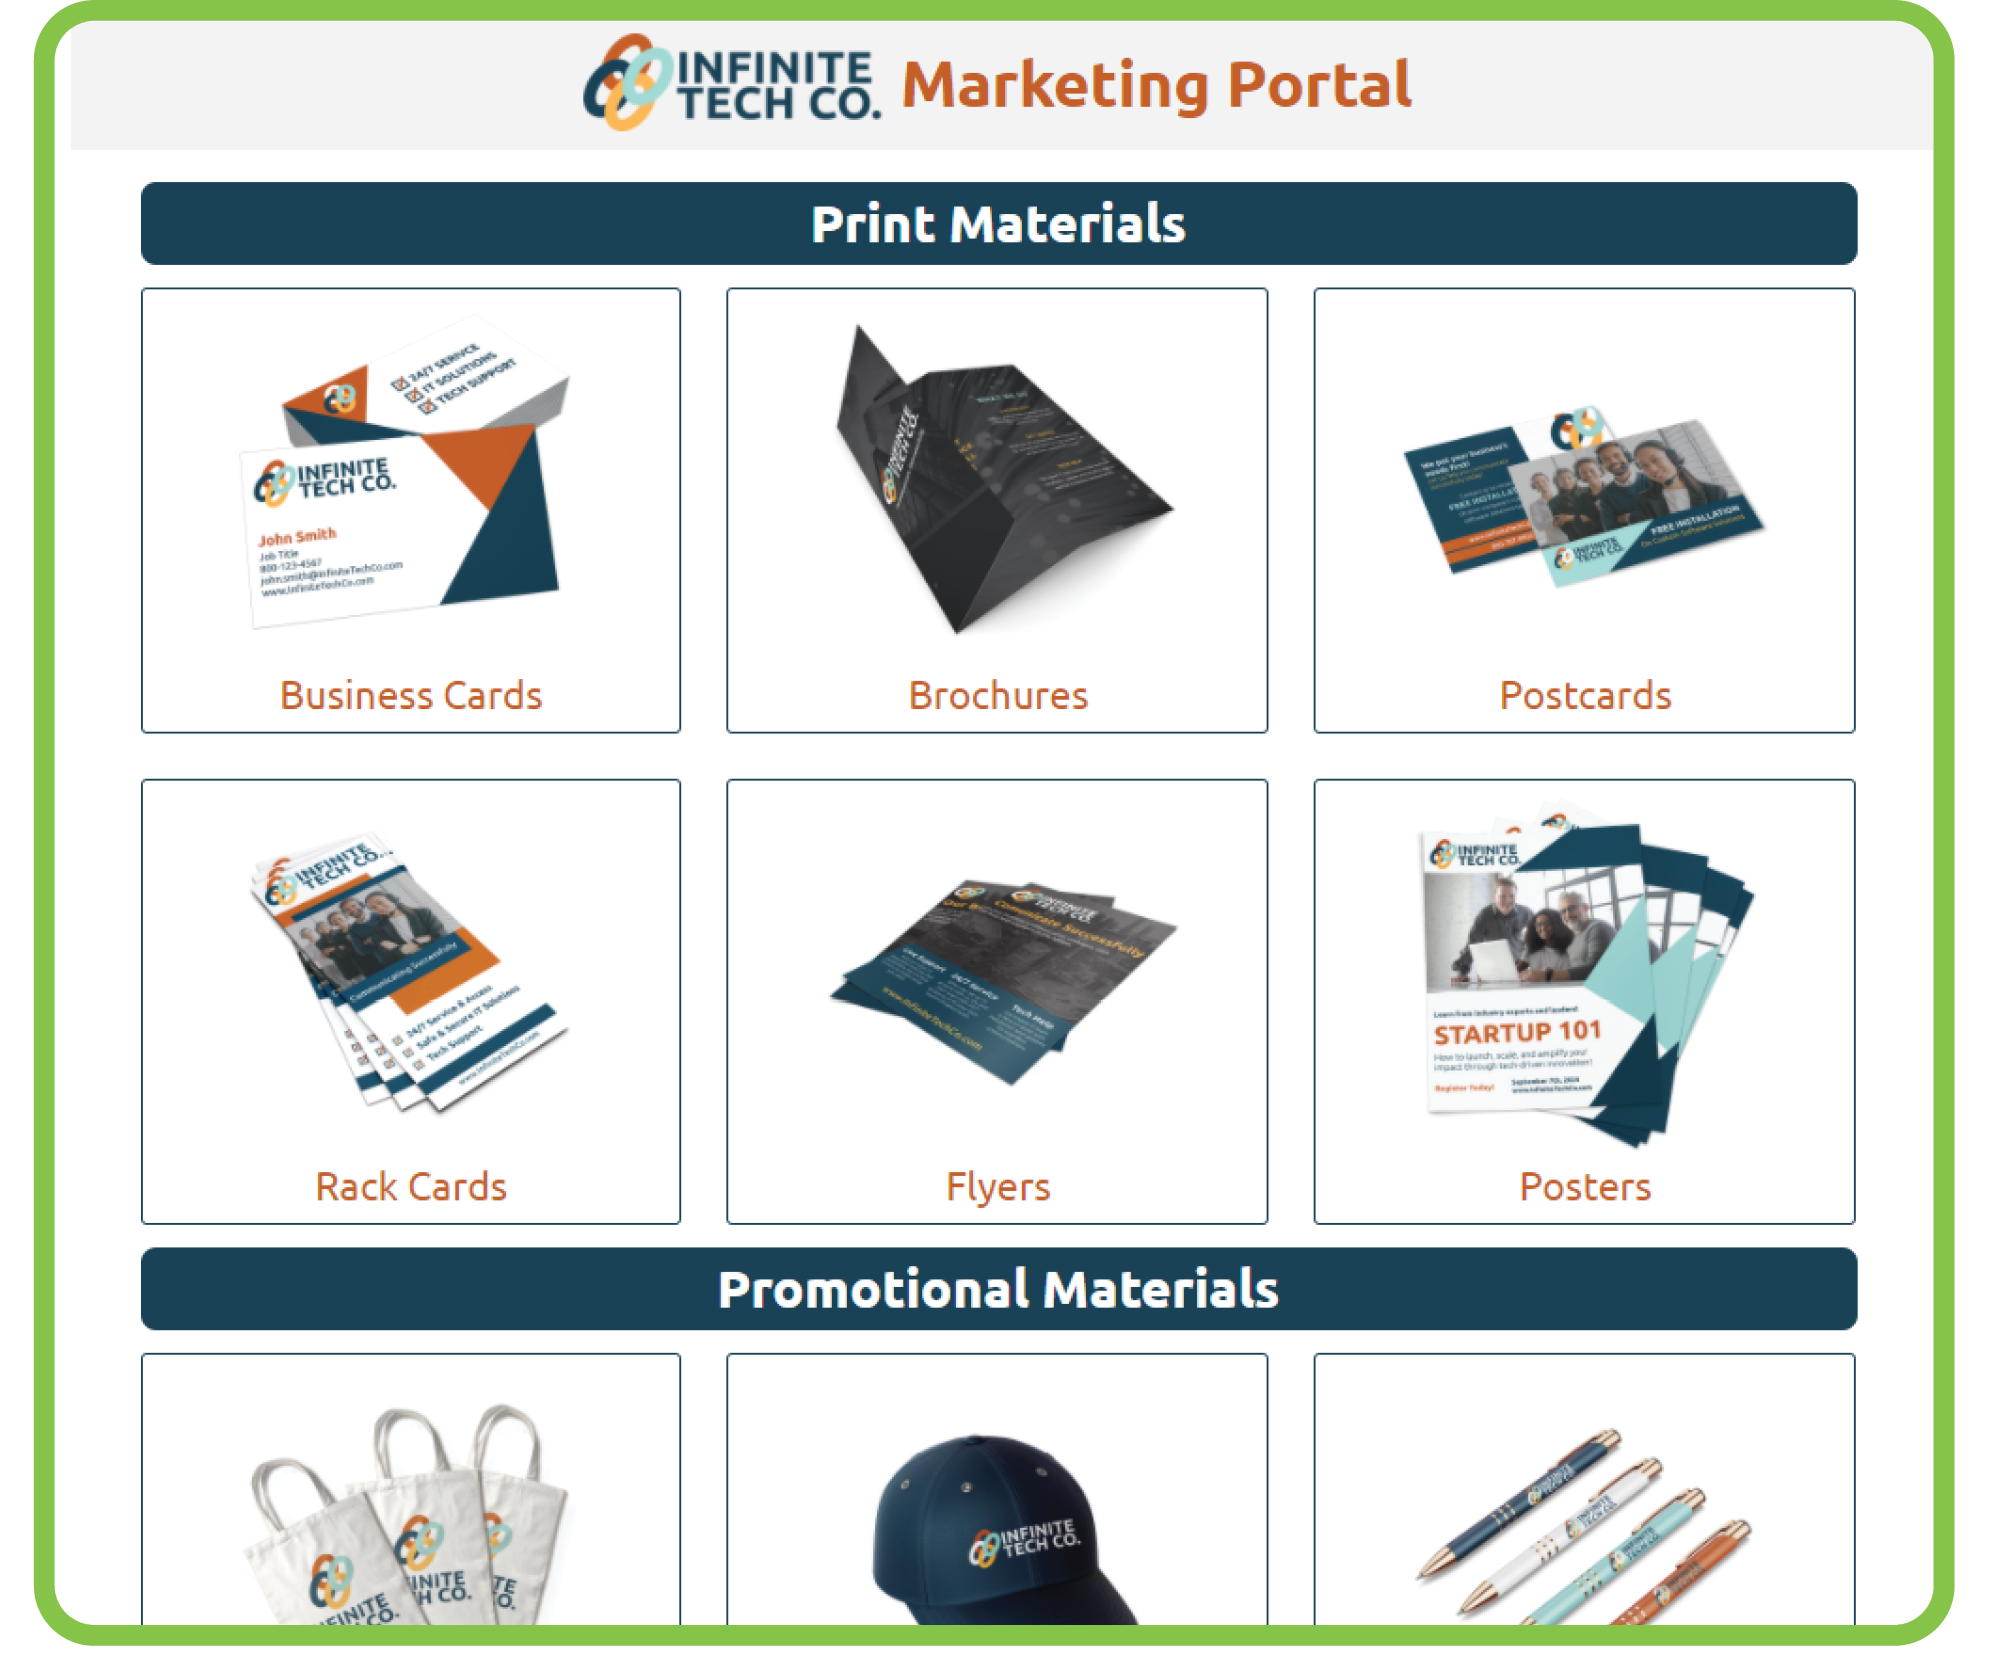 Your Marketing A Portal